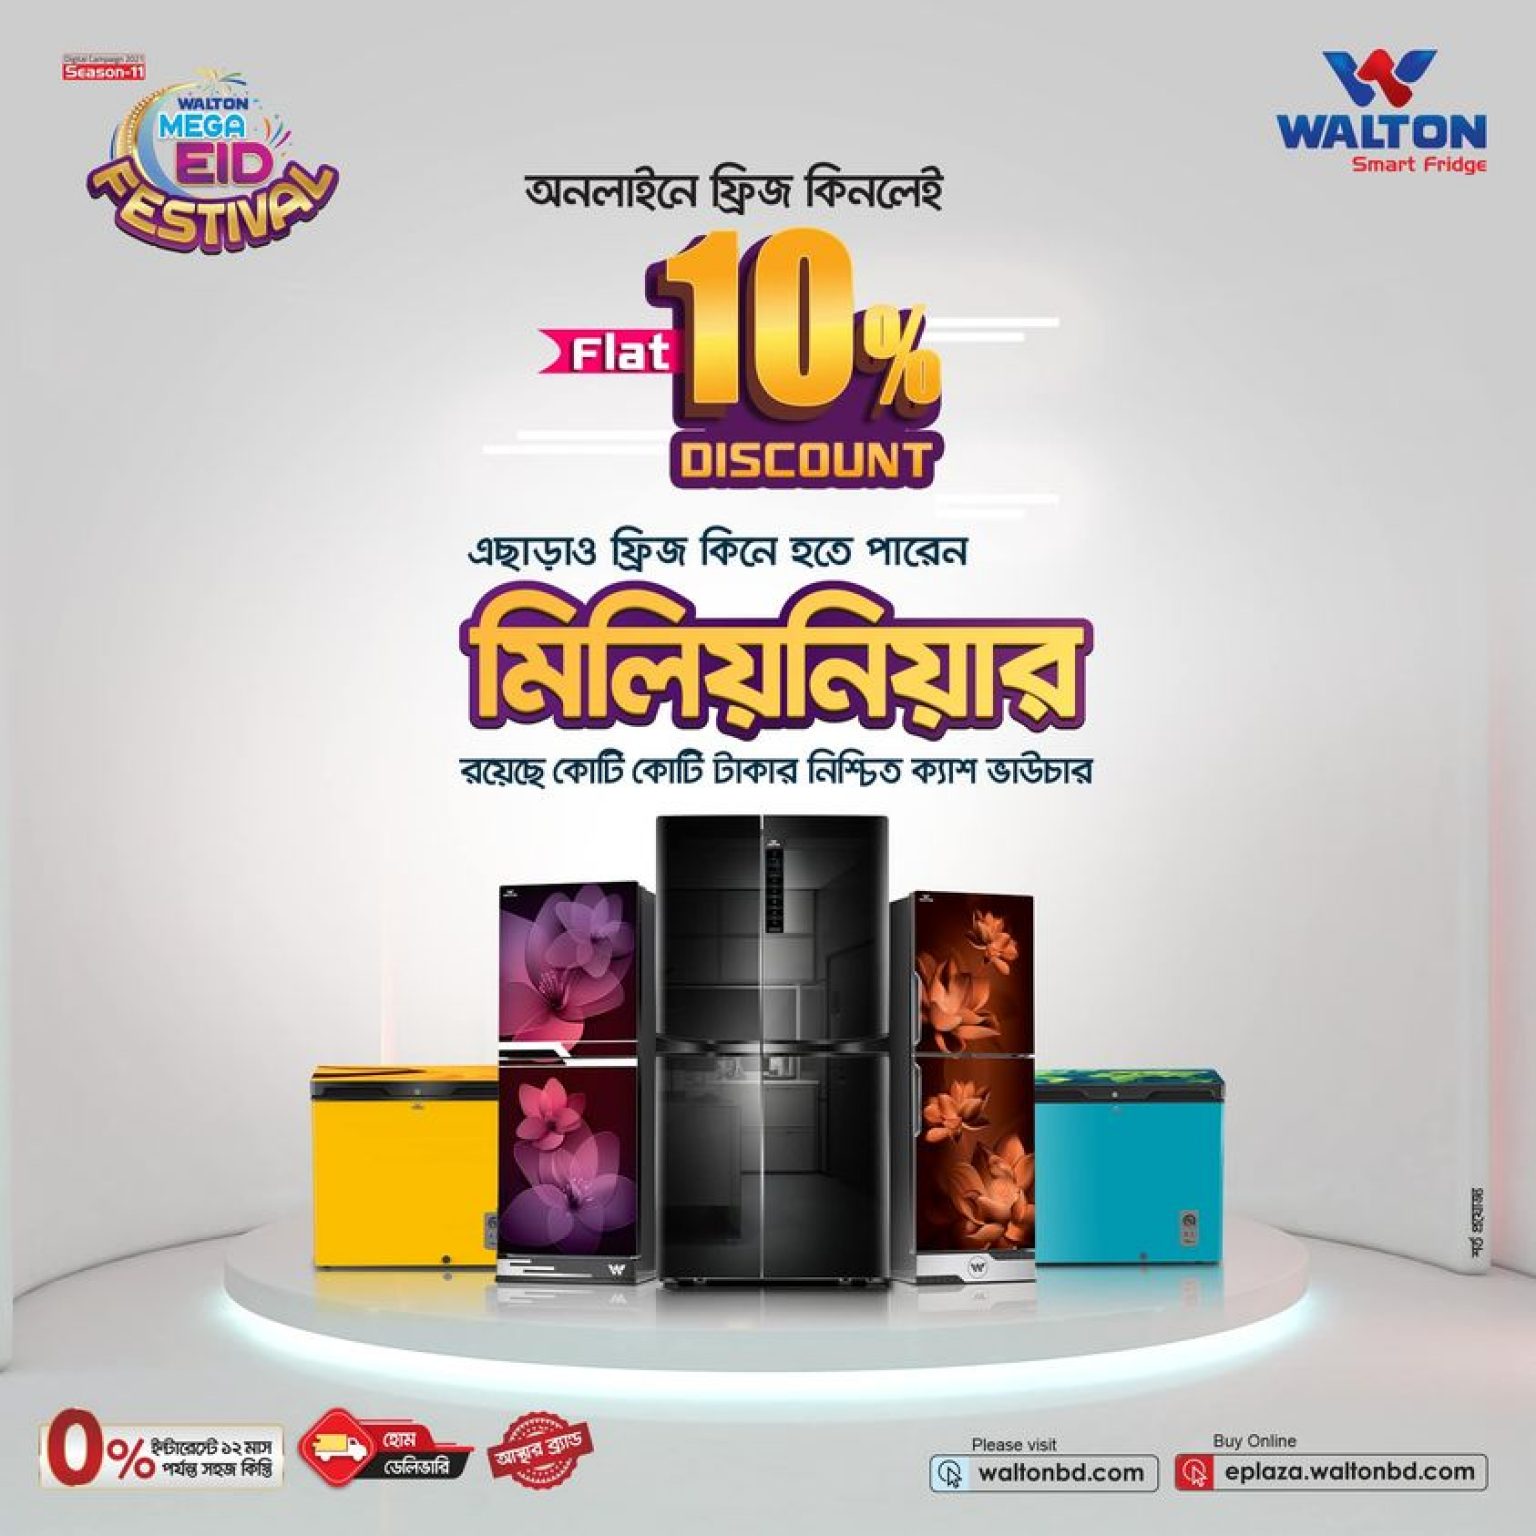 Walton Refrigerator Price in Bangladesh 10 Discount Offer